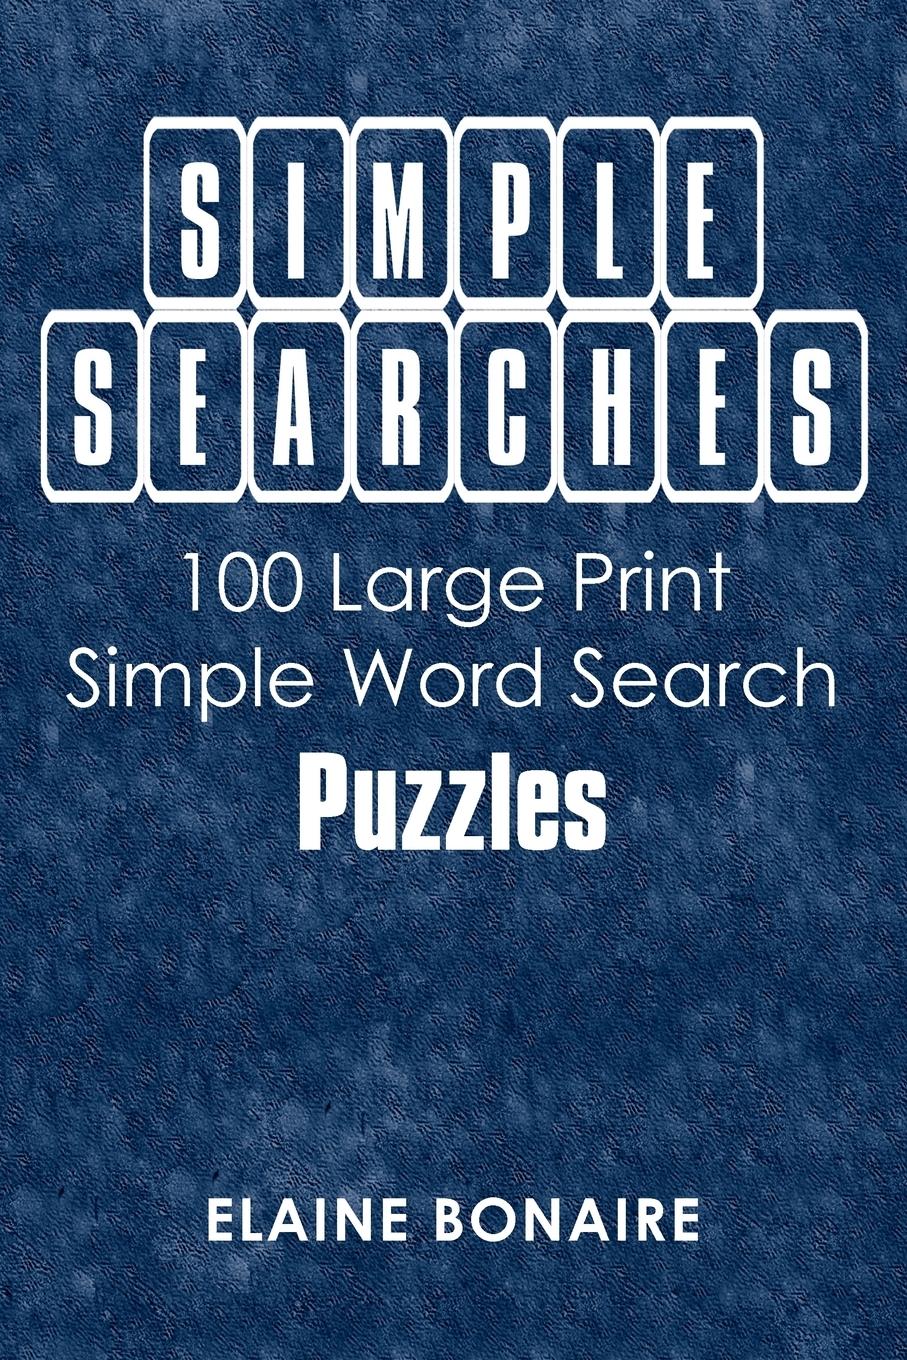 Simple Searches: 100 Large Print Simple Word Search Puzzles - Bonaire, Elaine